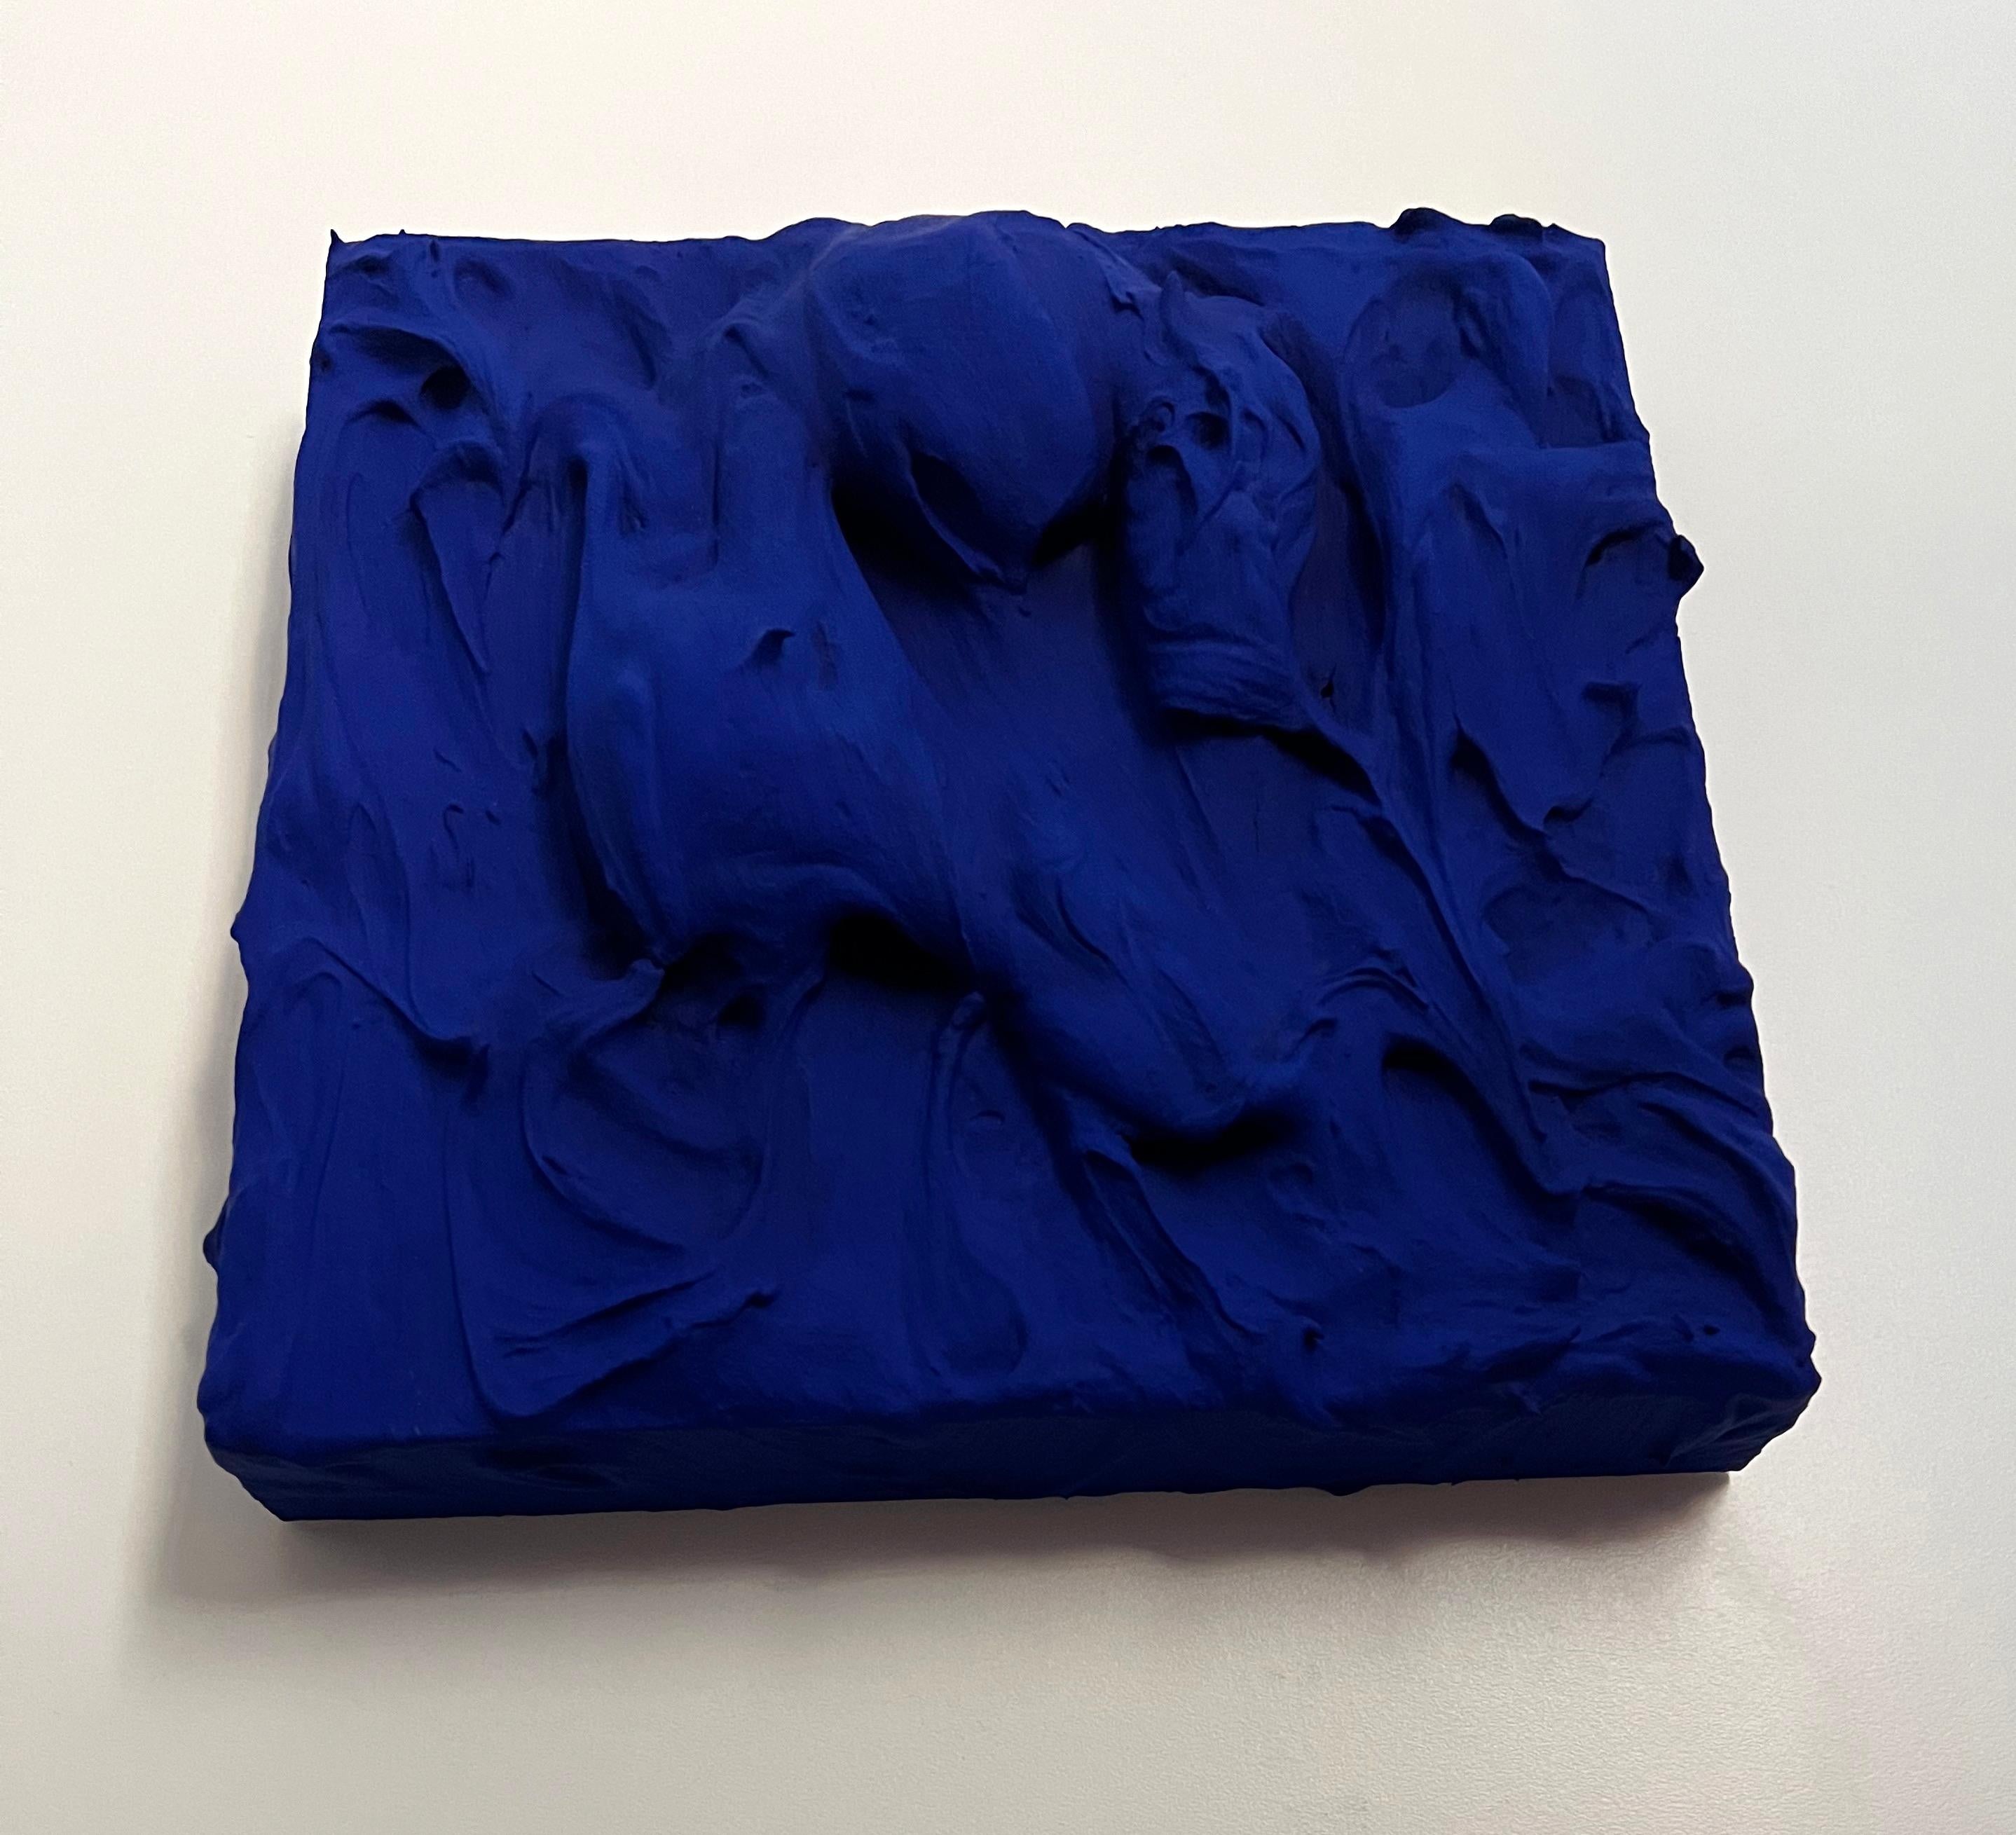 Ultra Blue Excess (thick impasto painting monochrome pop art square design) For Sale 1